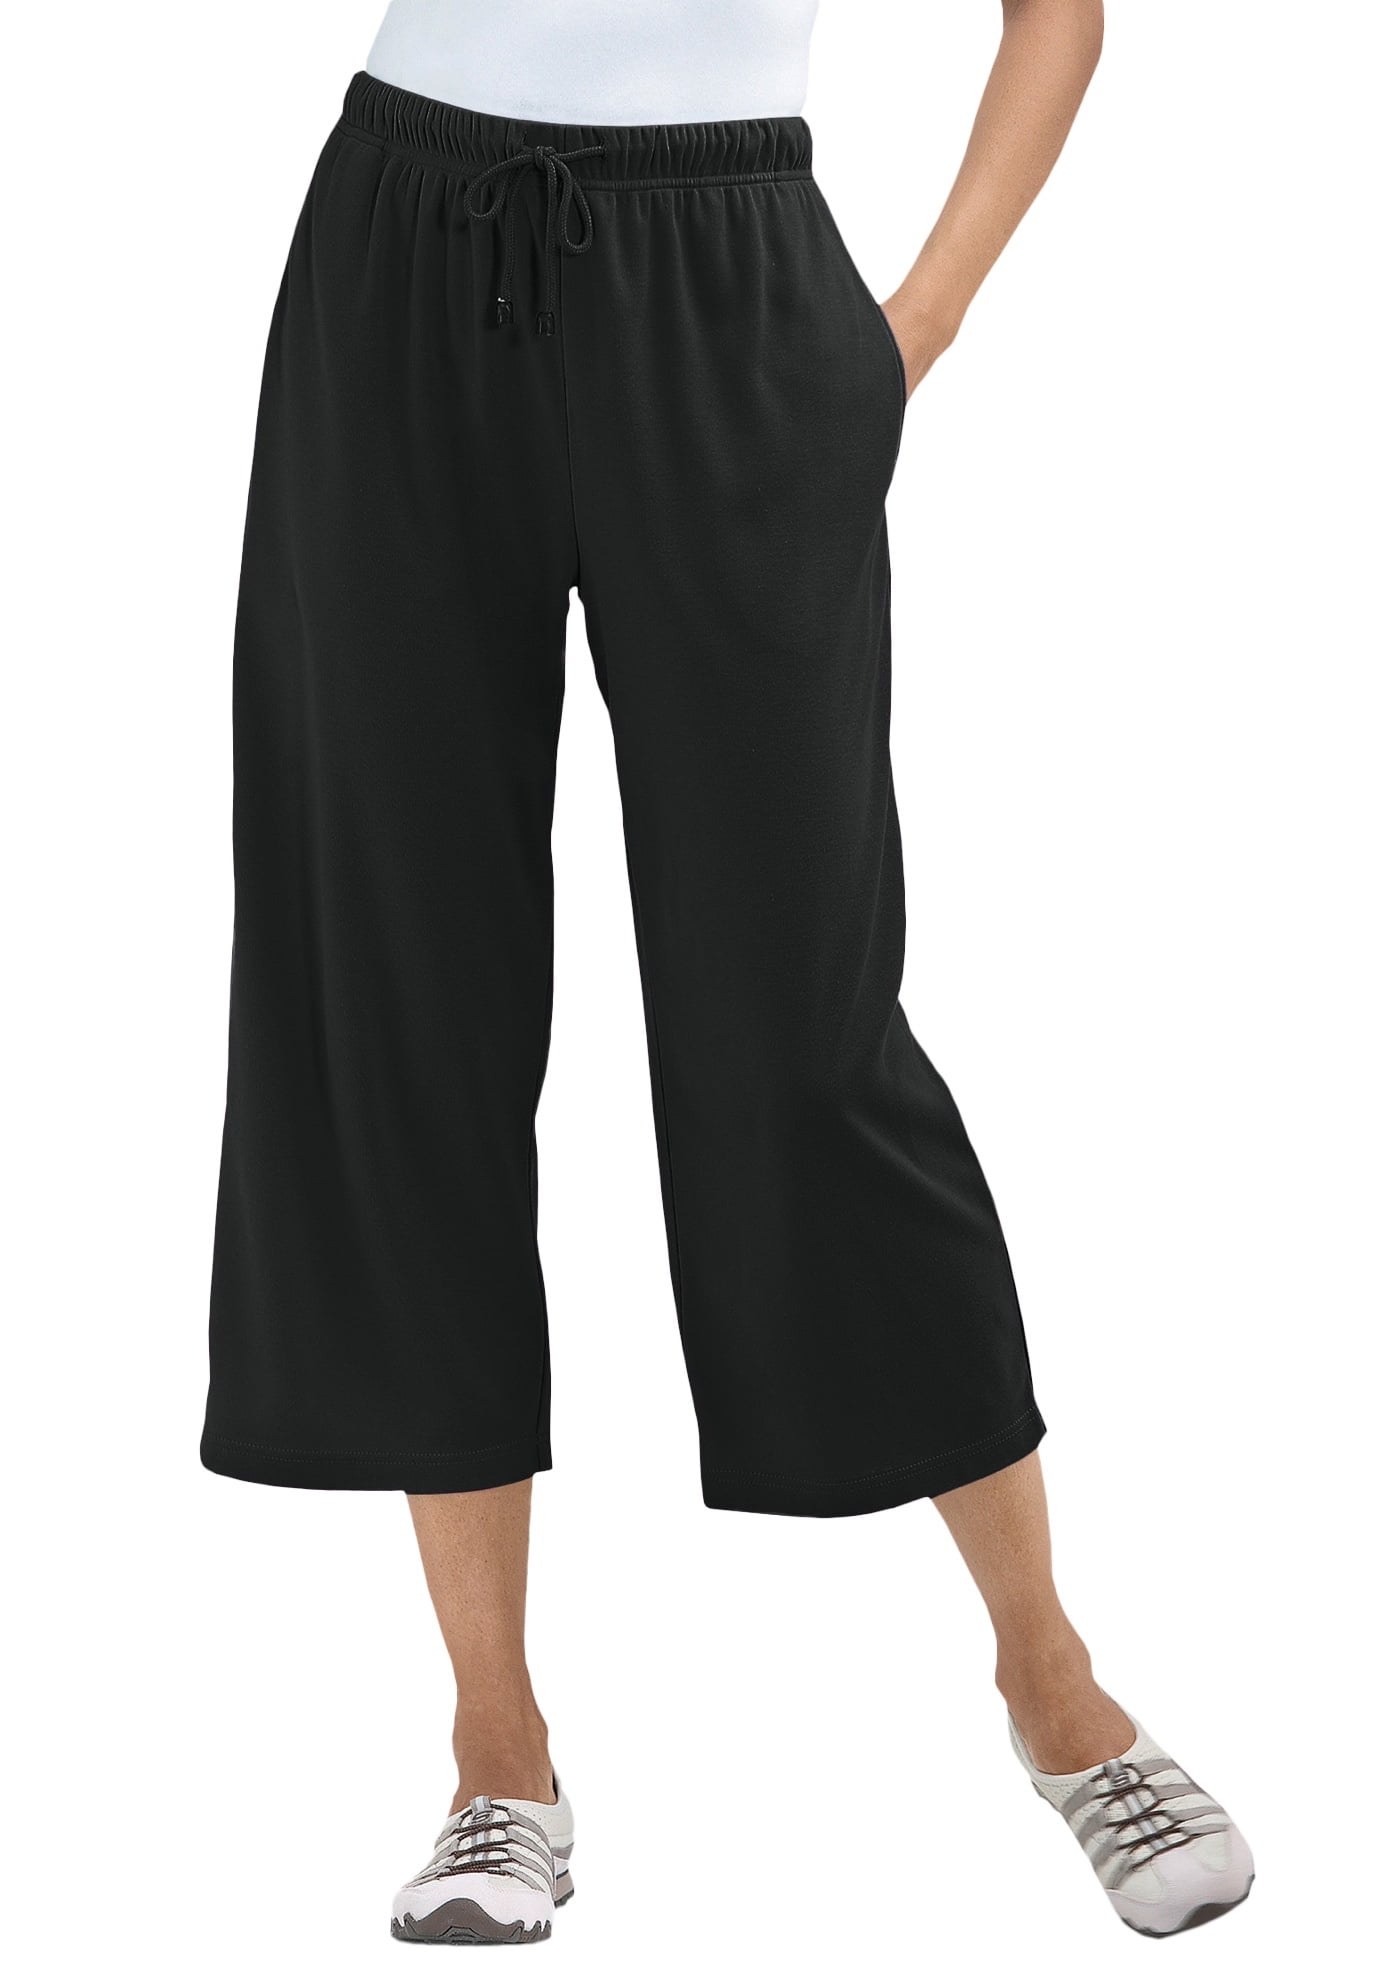 NEW Womens Knit Capri Pants Size Medium Ladies White w/ Black Drawstring Pockets 